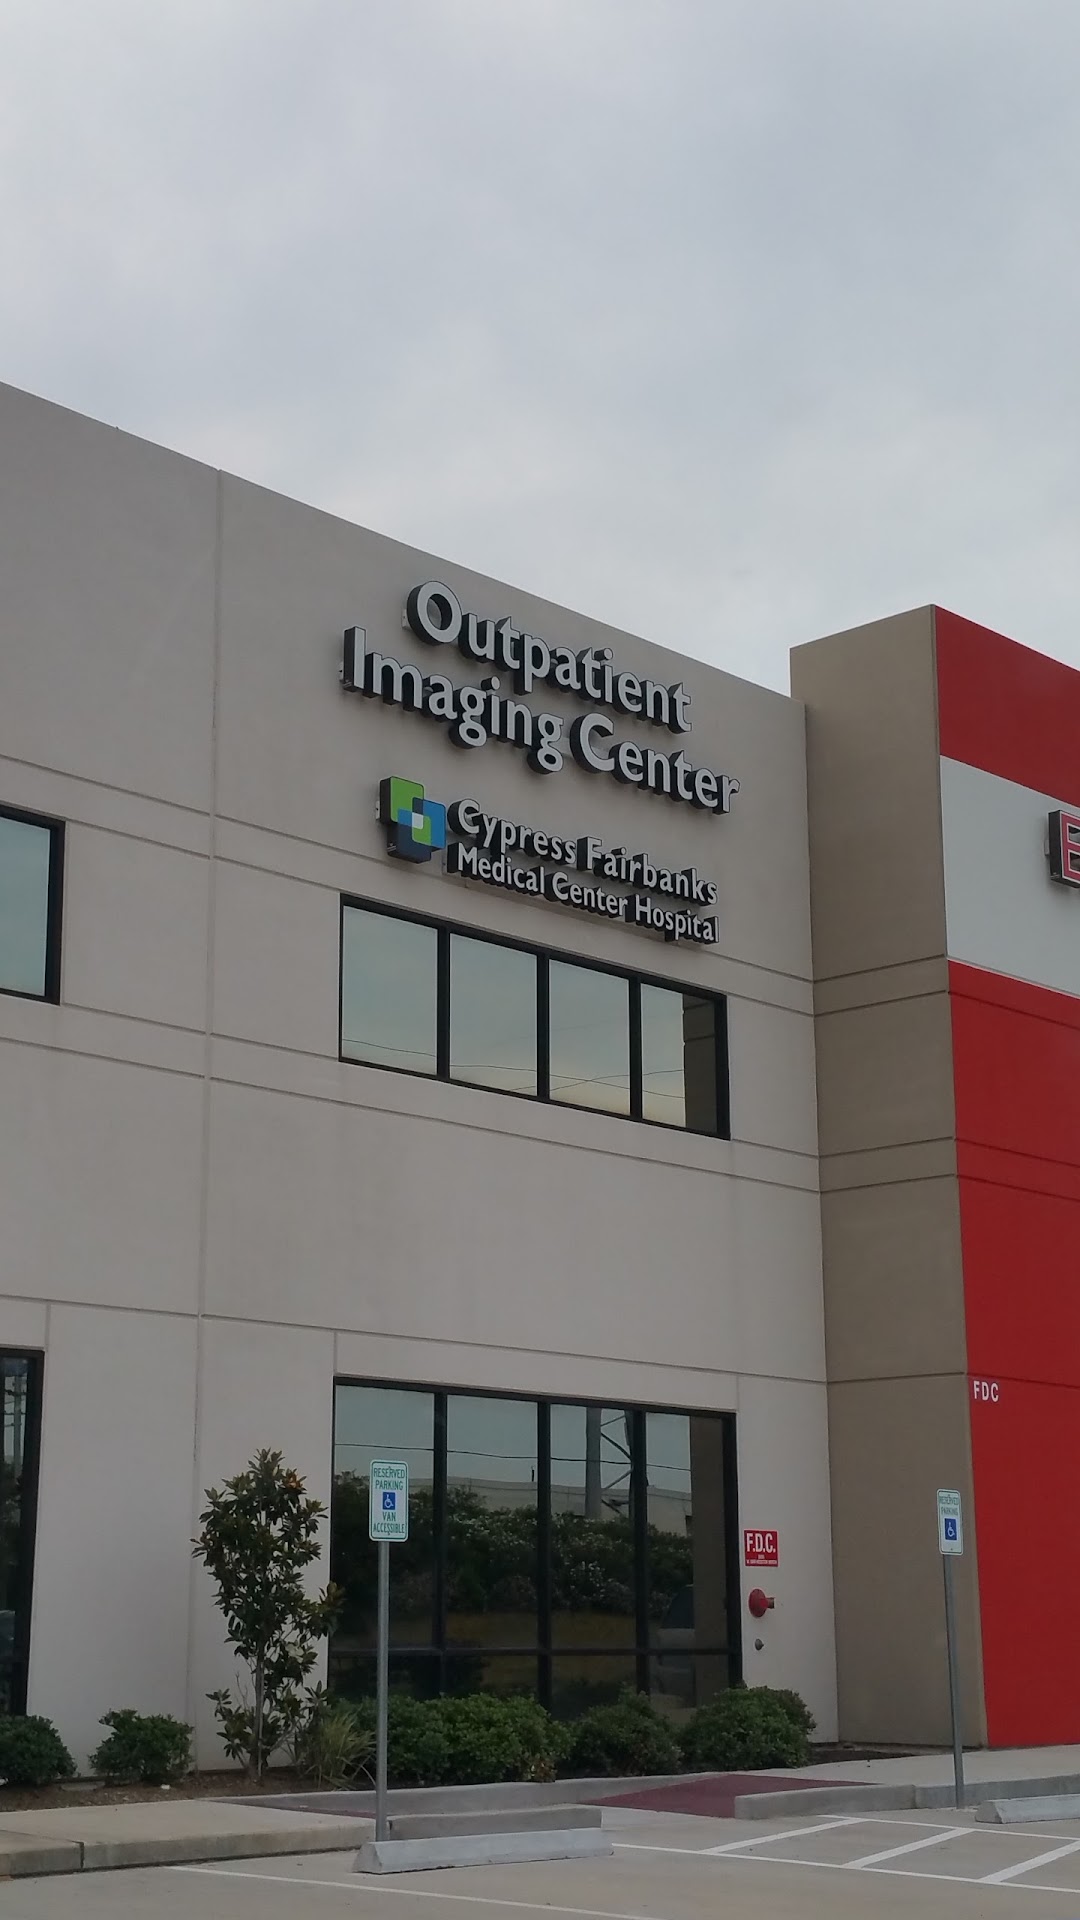 Outpatient Imaging Center